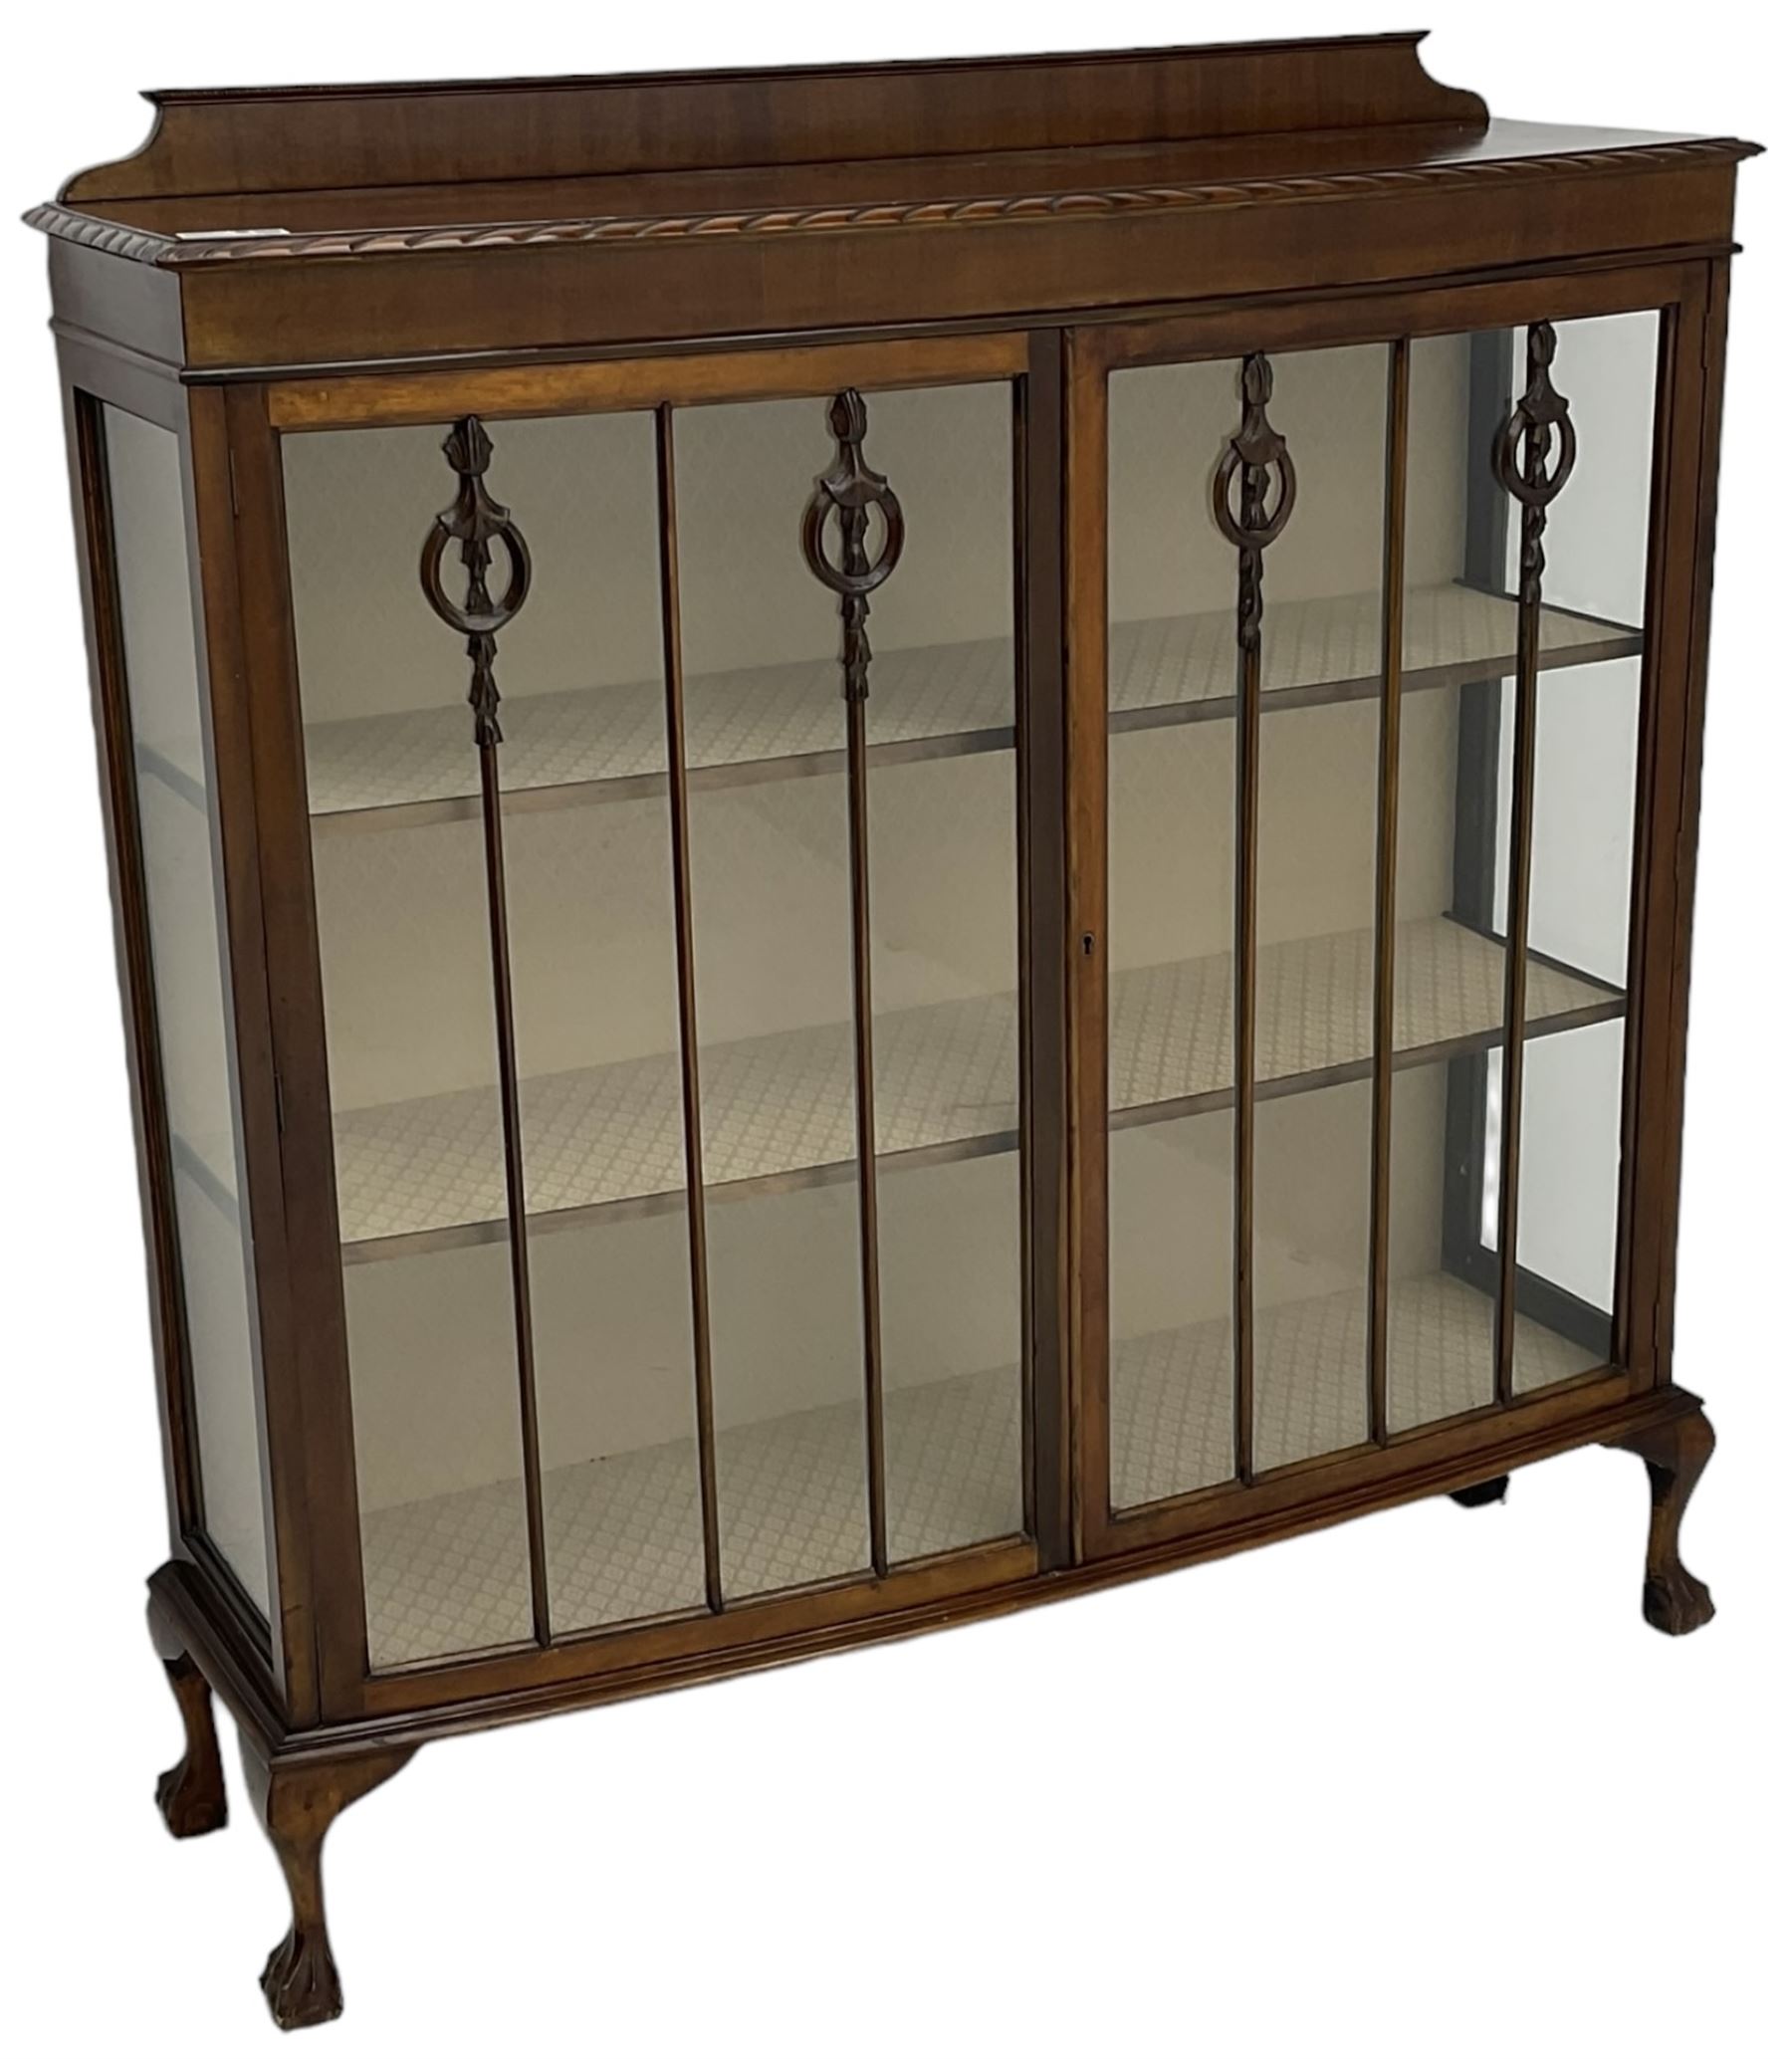 Early 20th century mahogany bow-front display cabinet